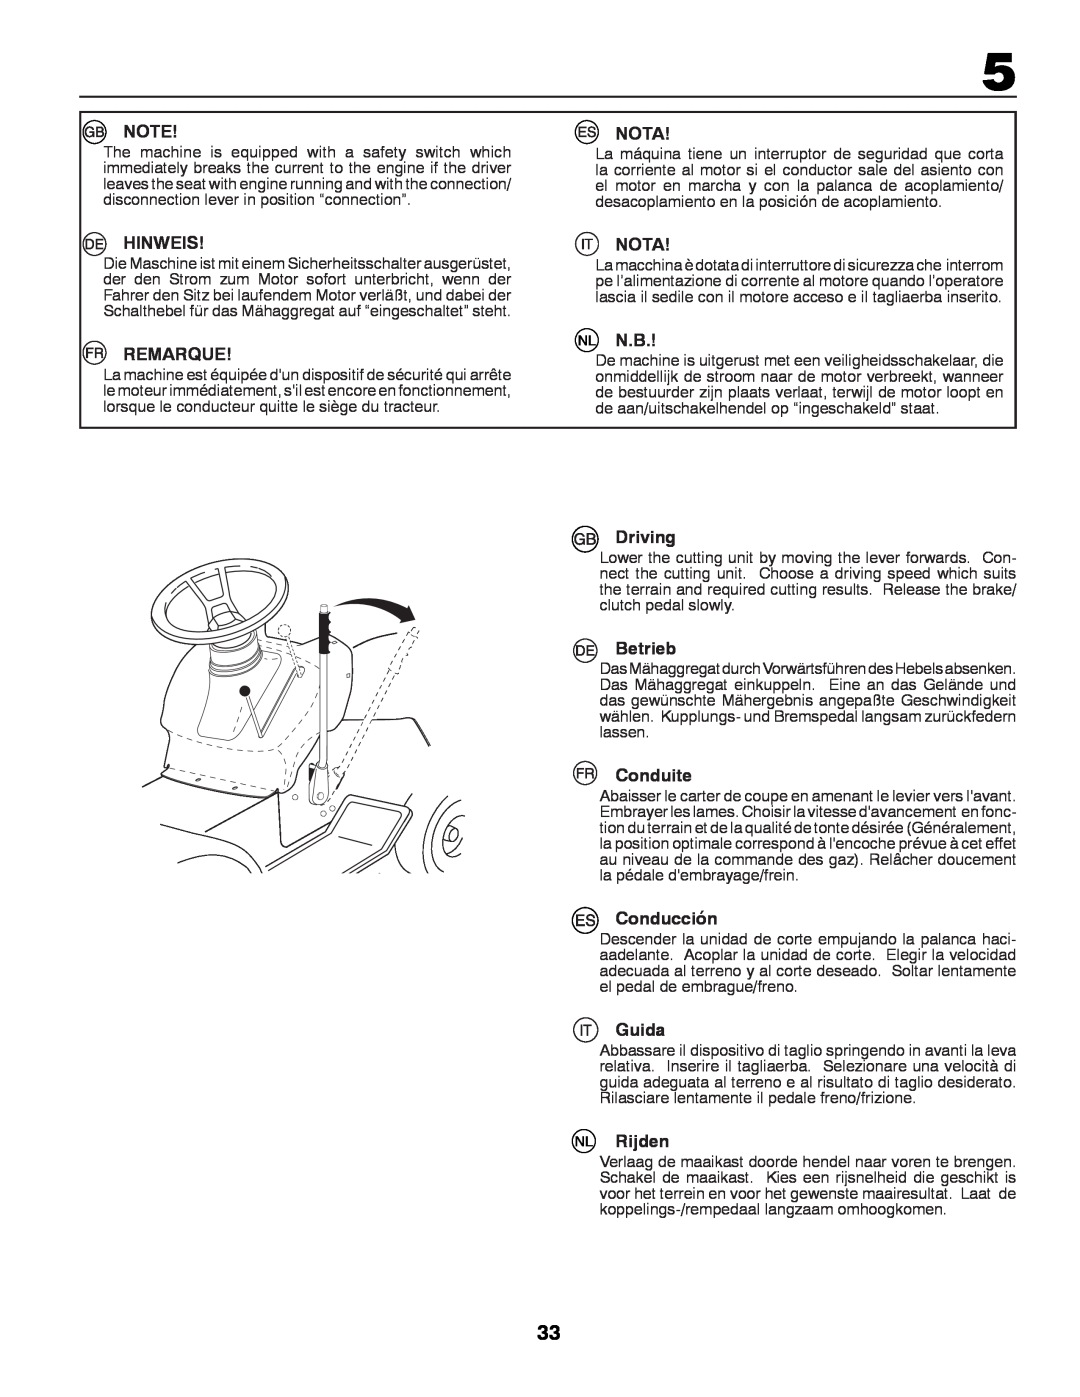 Husqvarna LT131 instruction manual Nota, Hinweis, Remarque, Driving, Betrieb, Conduite, Conducción, Guida, Rijden 